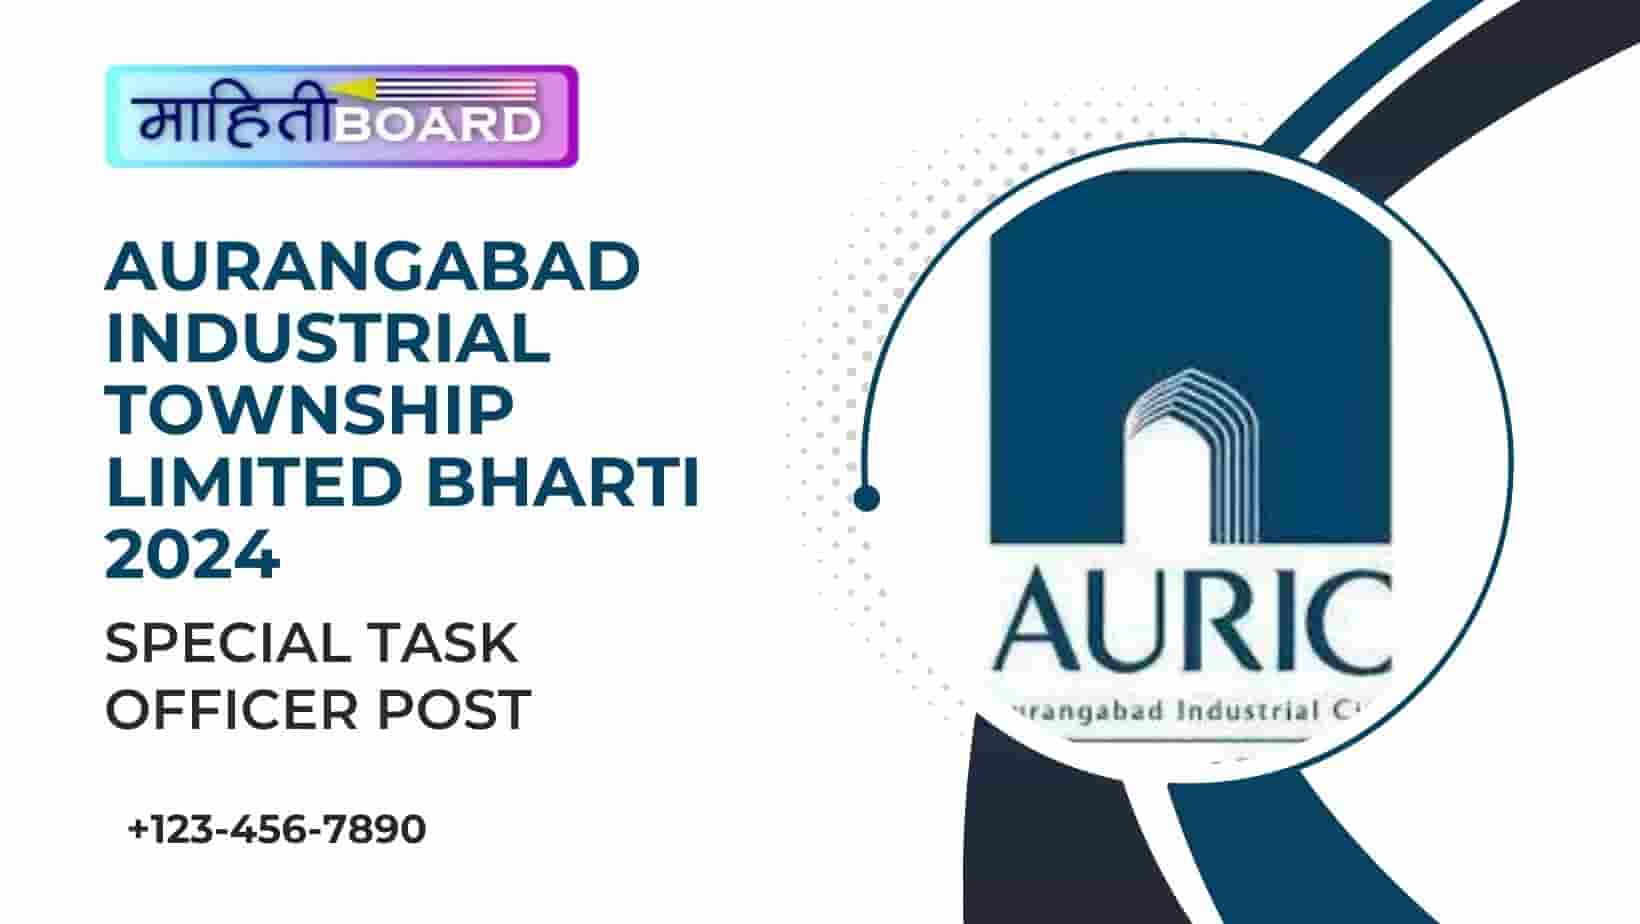 Aurangabad Industrial Township Limited Bharti 2024